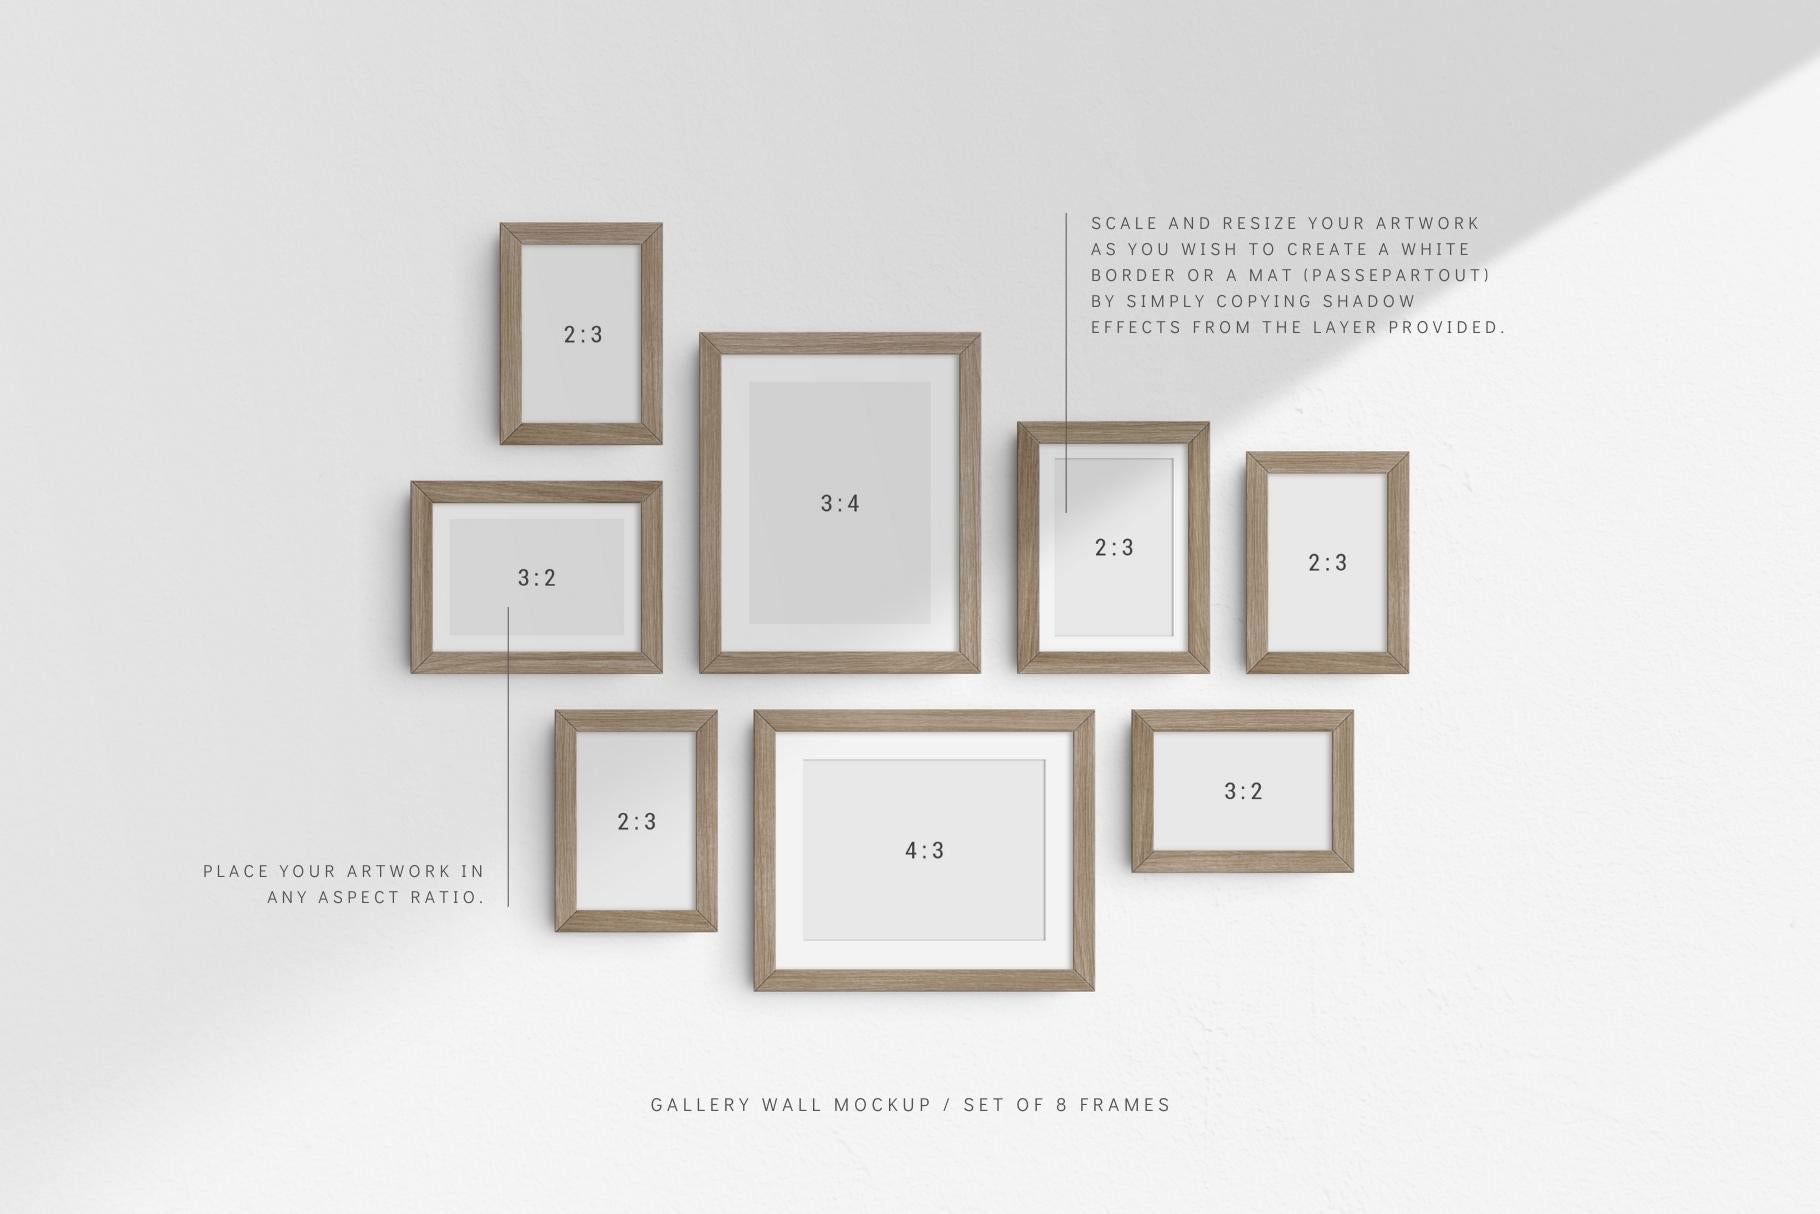 Gallery Wall Mockup | Set of 8 Frames | Frame Mockup | PSD | Mat Passepartout